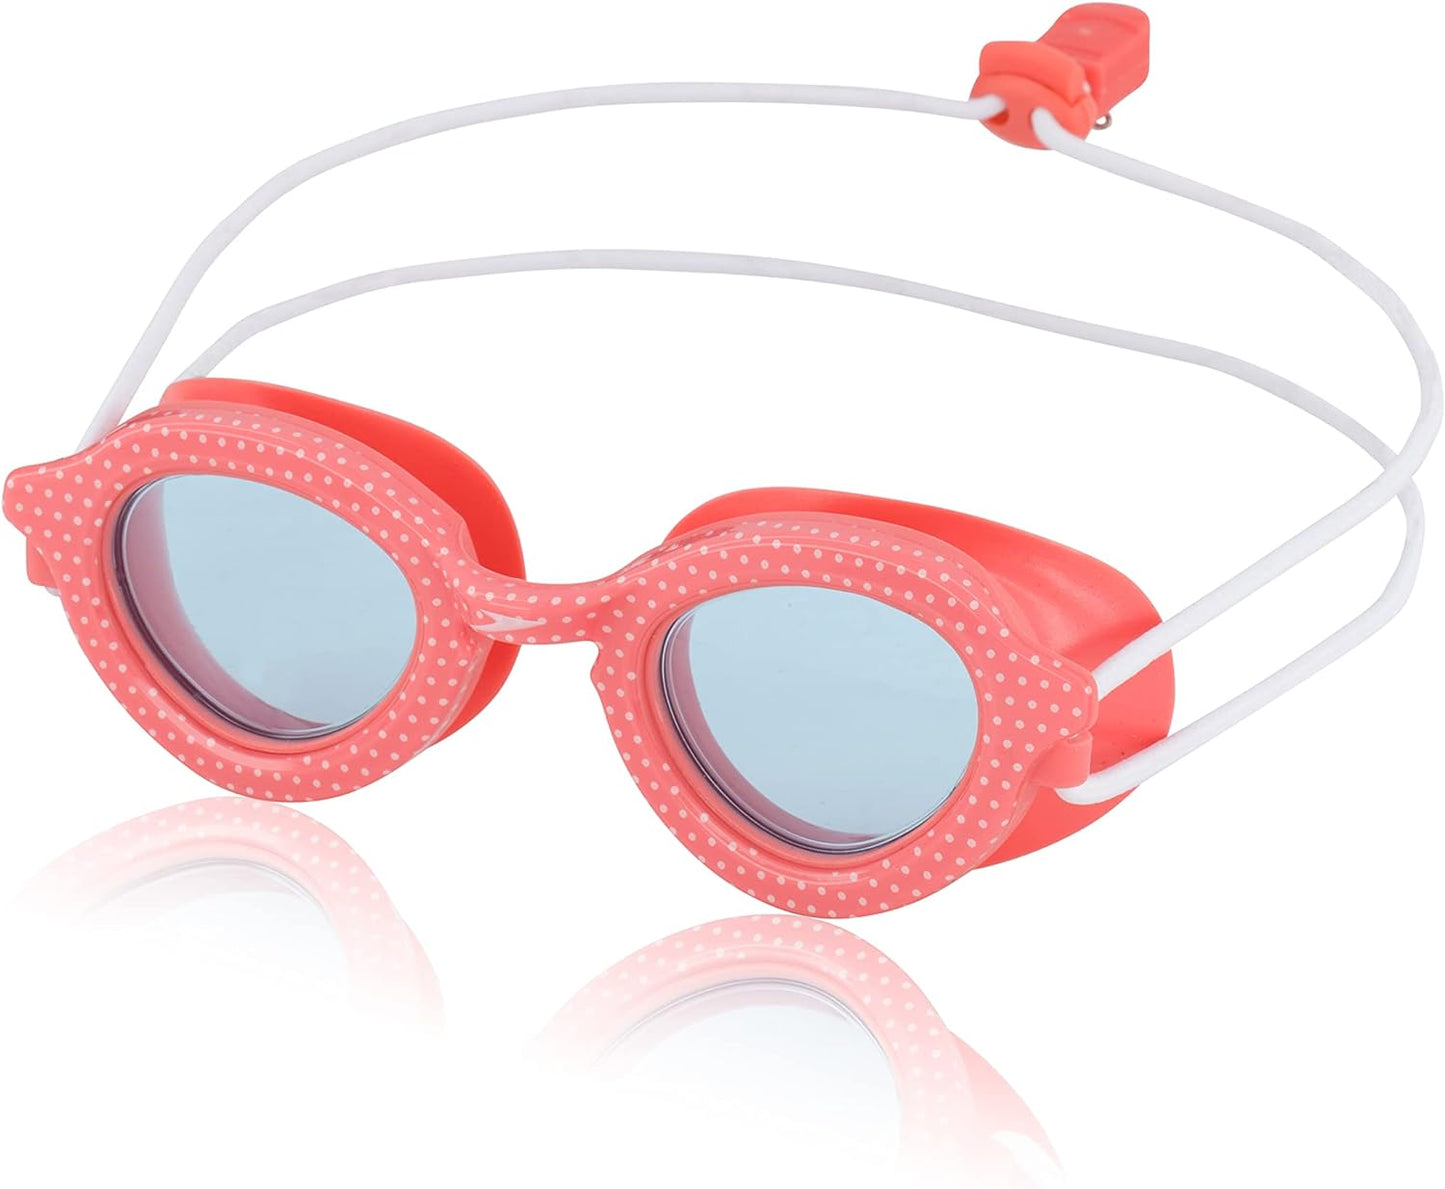 Unisex-Child Swim Goggles Sunny G Ages 3-8